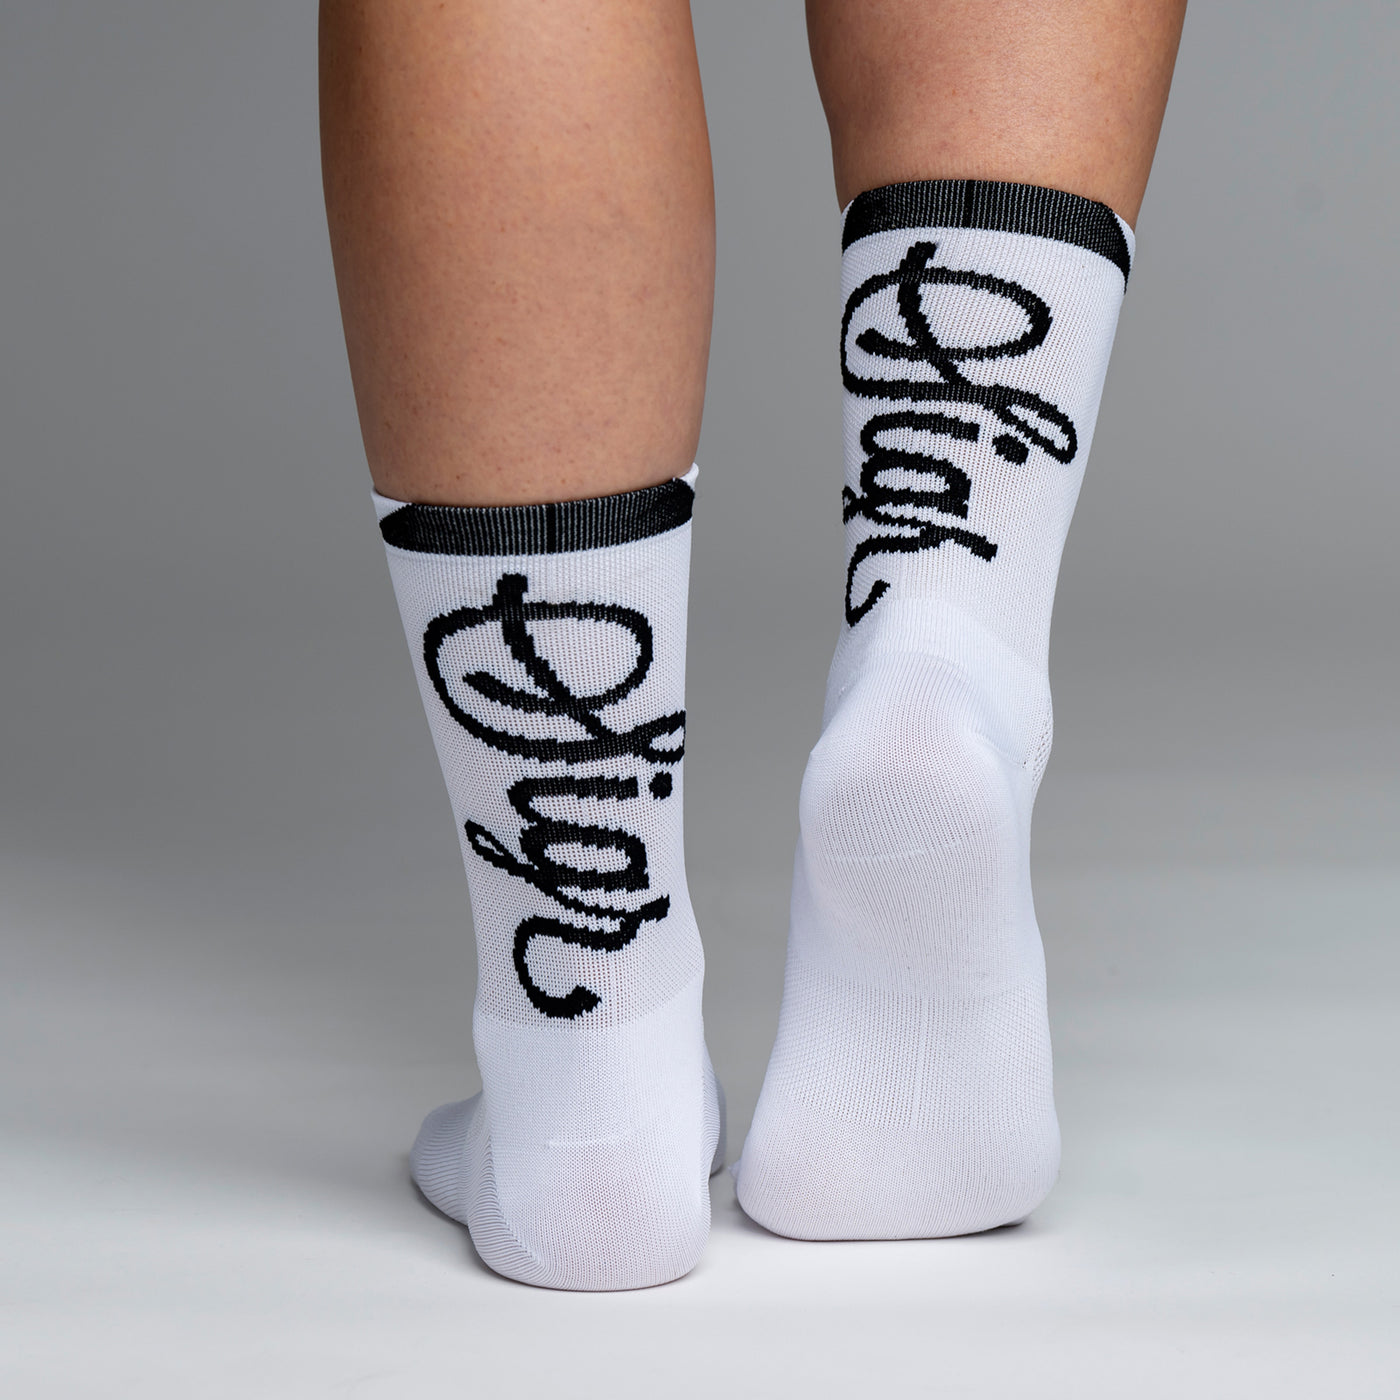 Snok - Larger Logo White Cycling Socks for Women - Pack of 2 pairs